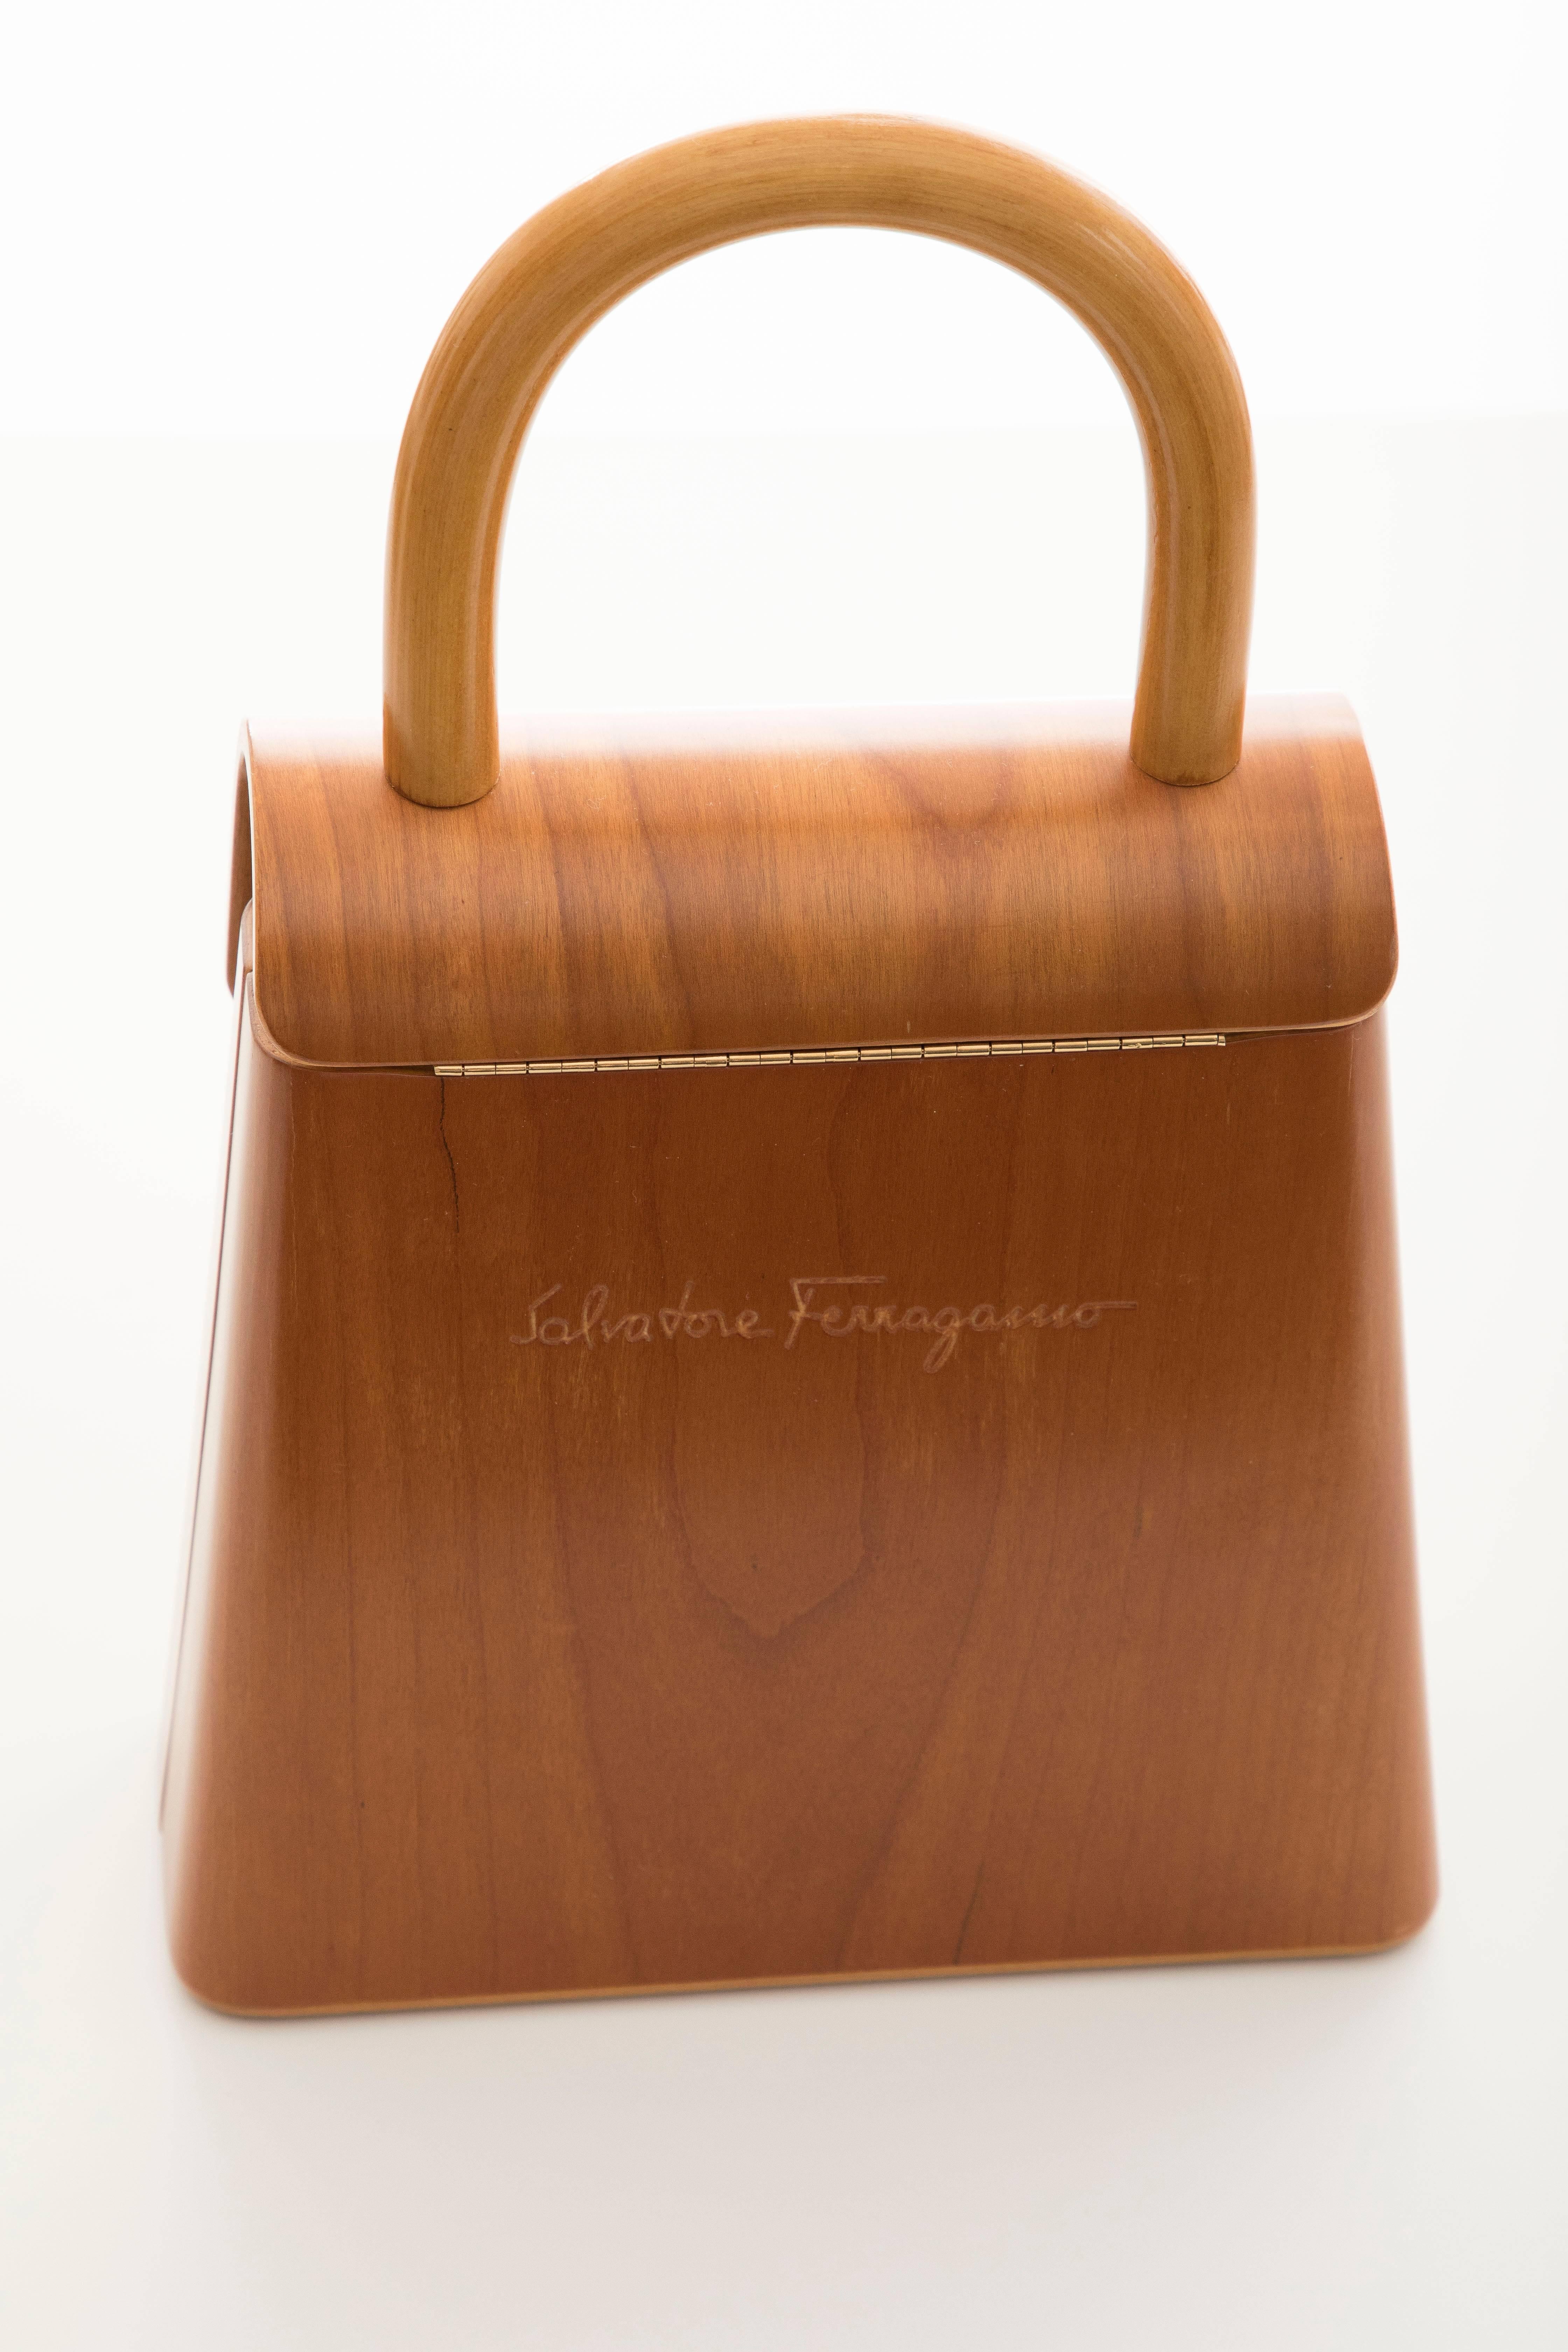 Salvatore Ferragamo Gancini Top Handle Cherry Wood Handbag, Circa 1997 - 1998 3